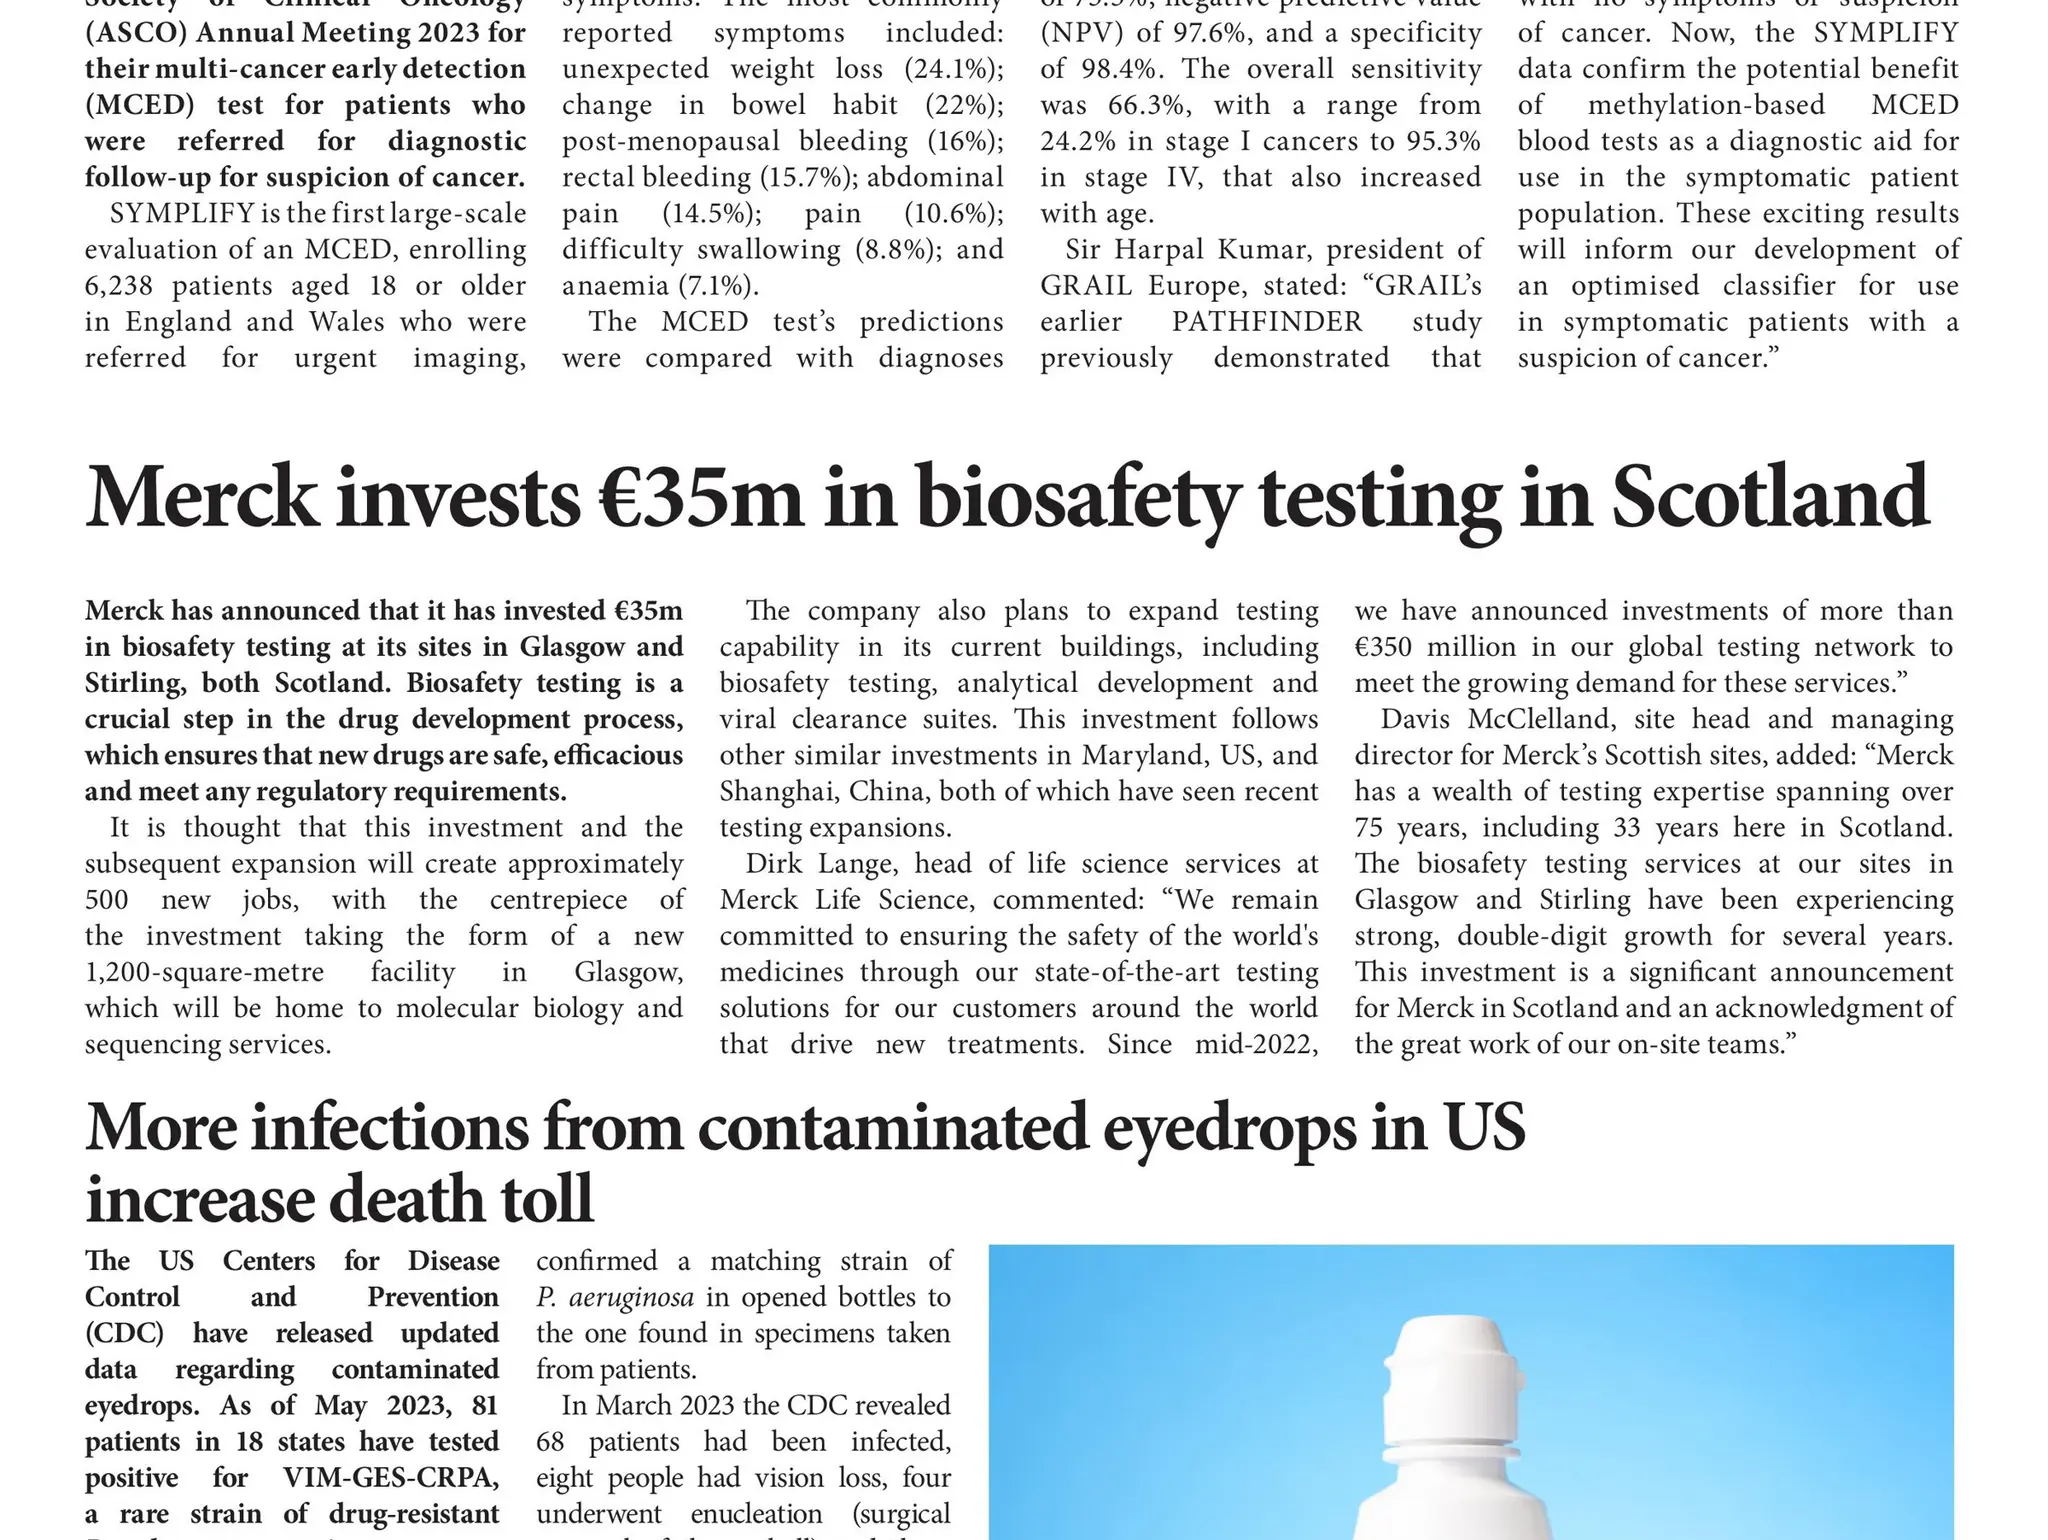 Merck invests €35m in biosafety testing in Scotland